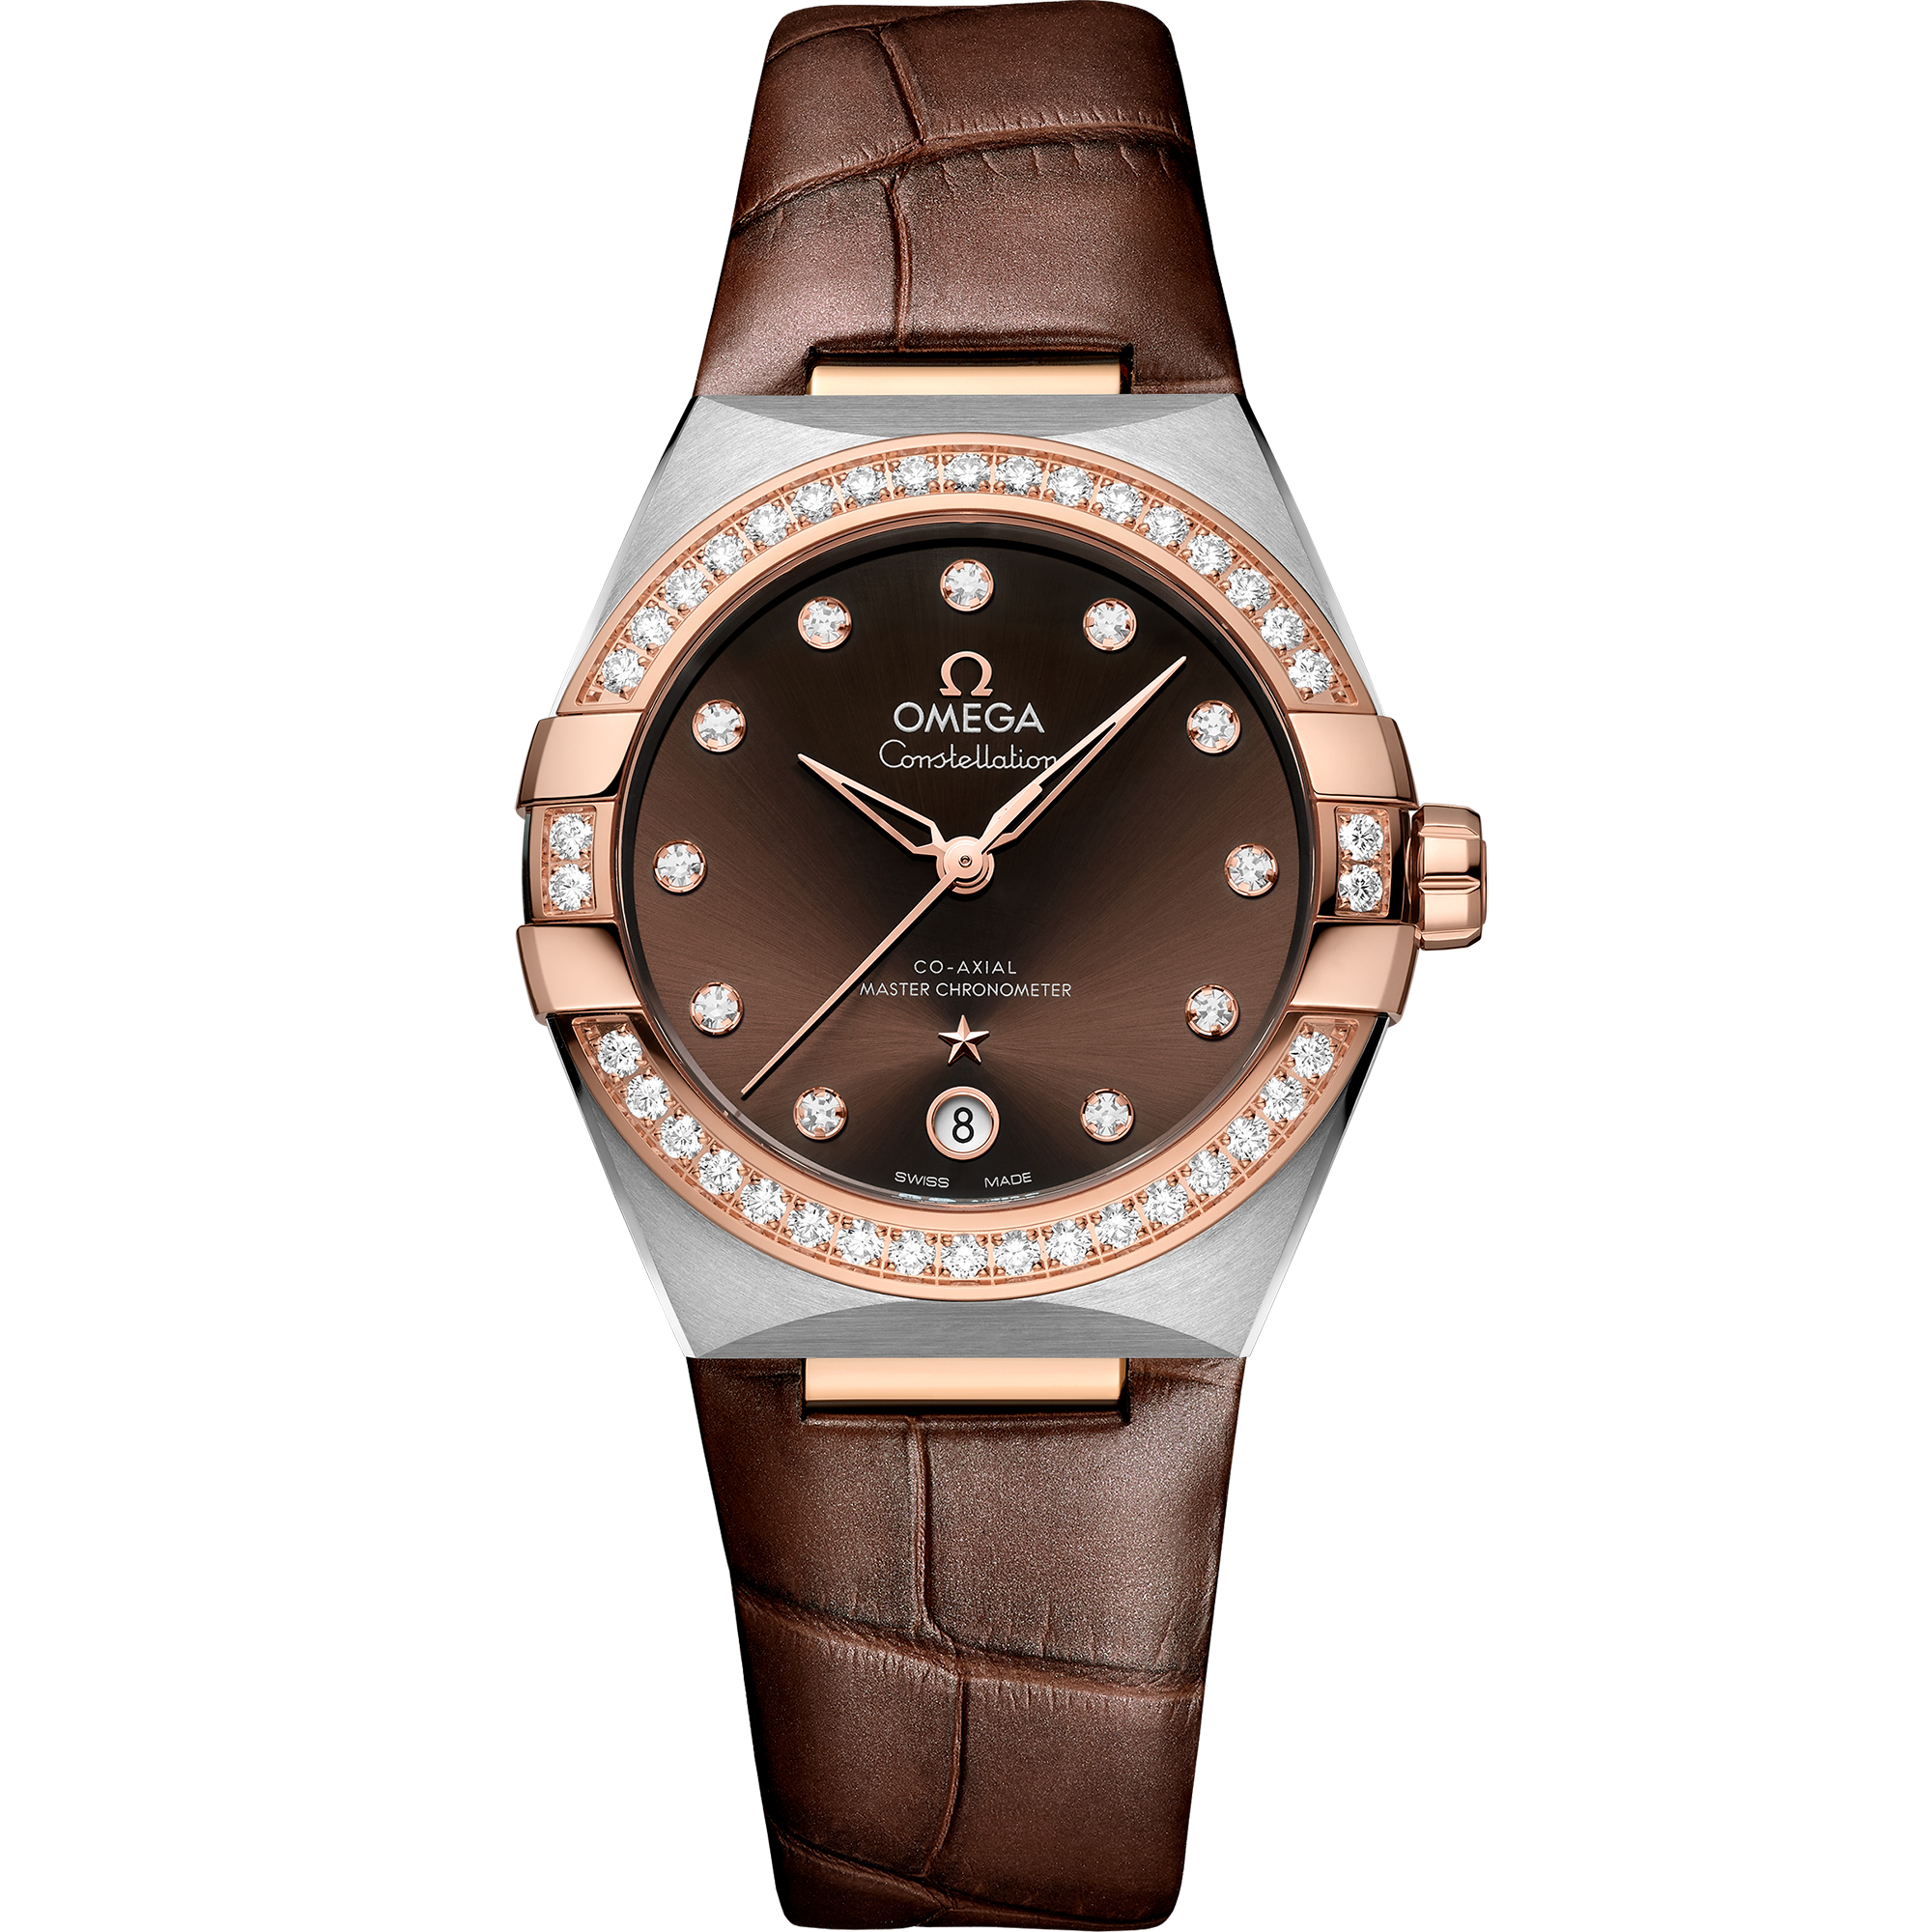 Constellation 36 mm, acier - or « Sedna™ » sur bracelet en cuir - 131.28.36.20.63.001